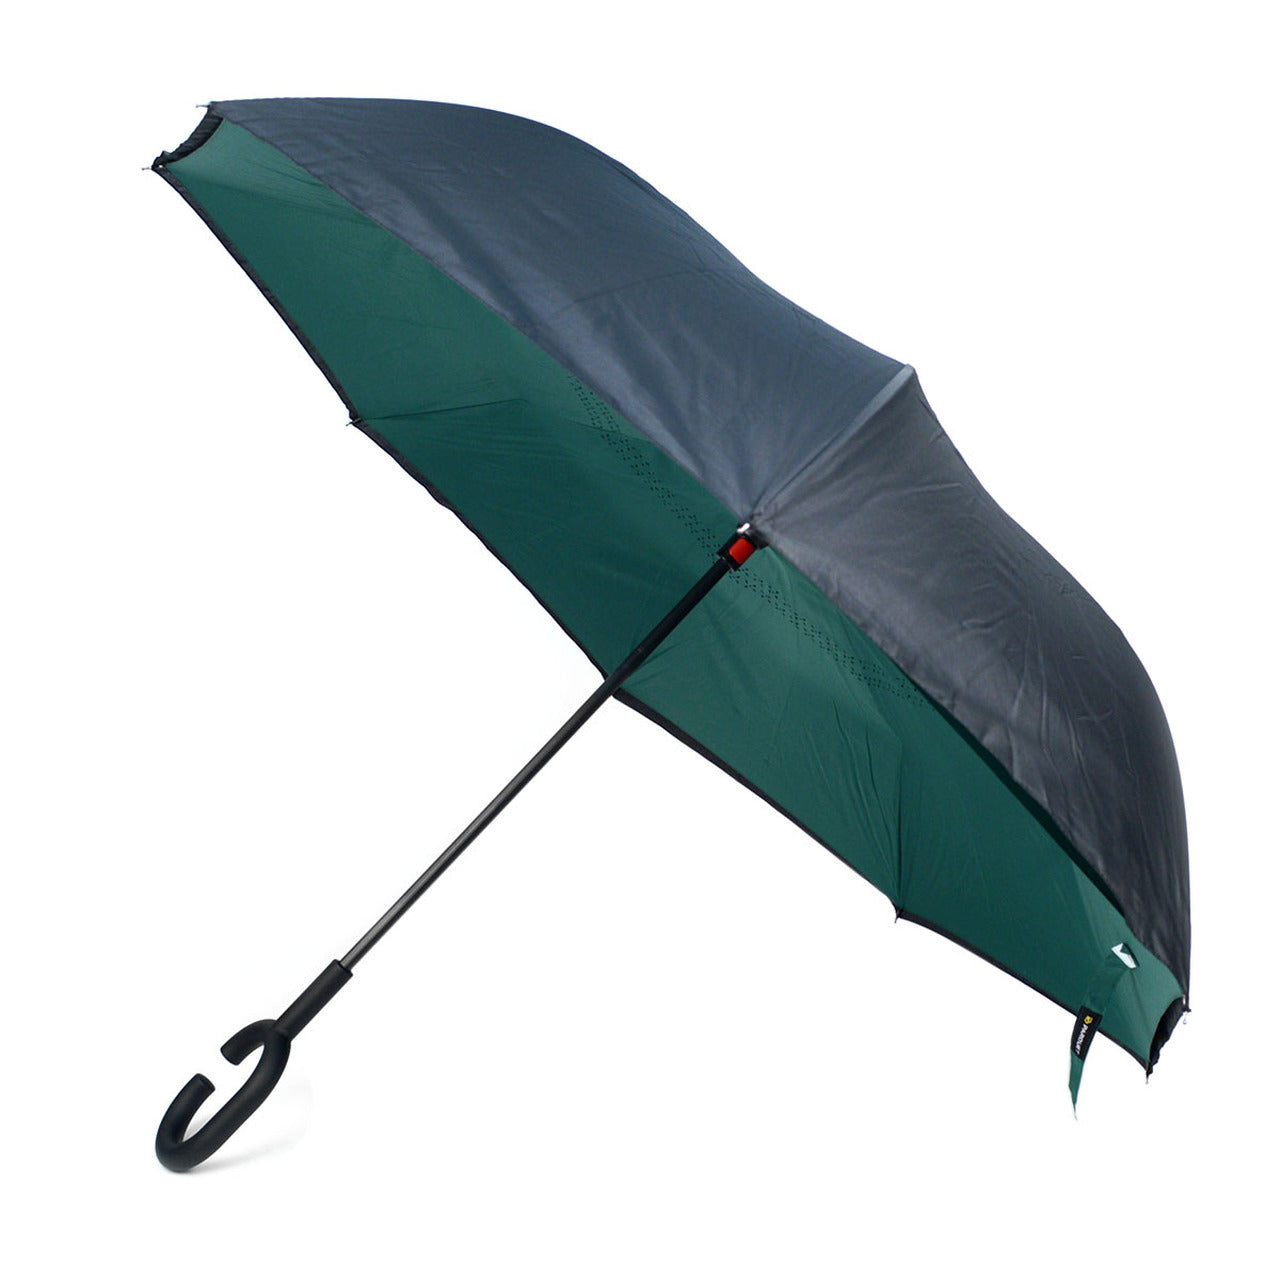 Selini Solid Color Double Layer Inverted Umbrella - Green